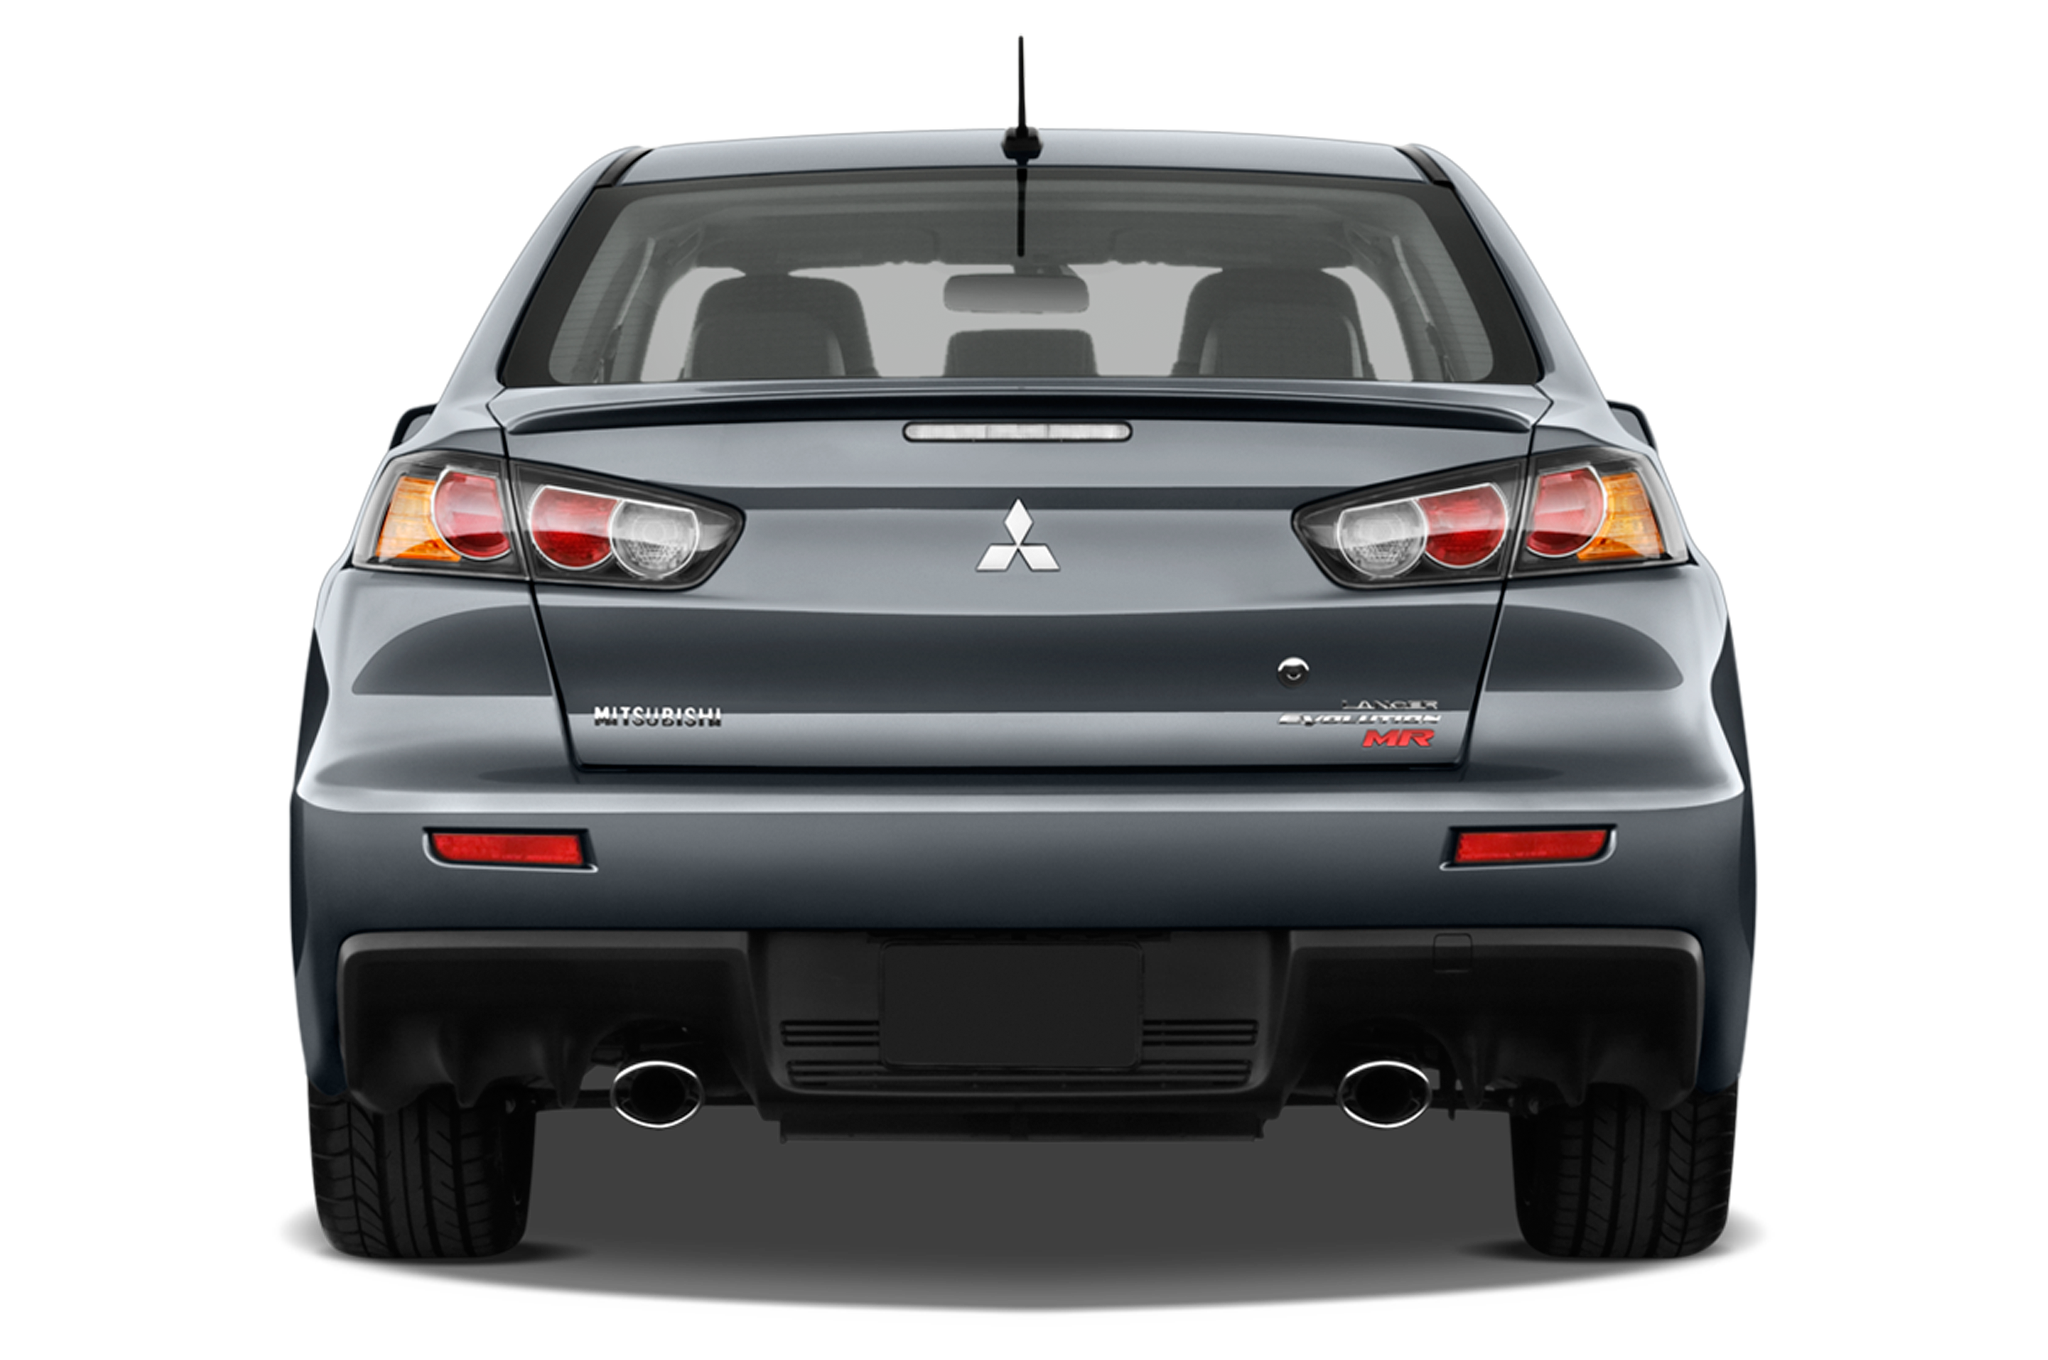 Mitsubishi PNG images Download 